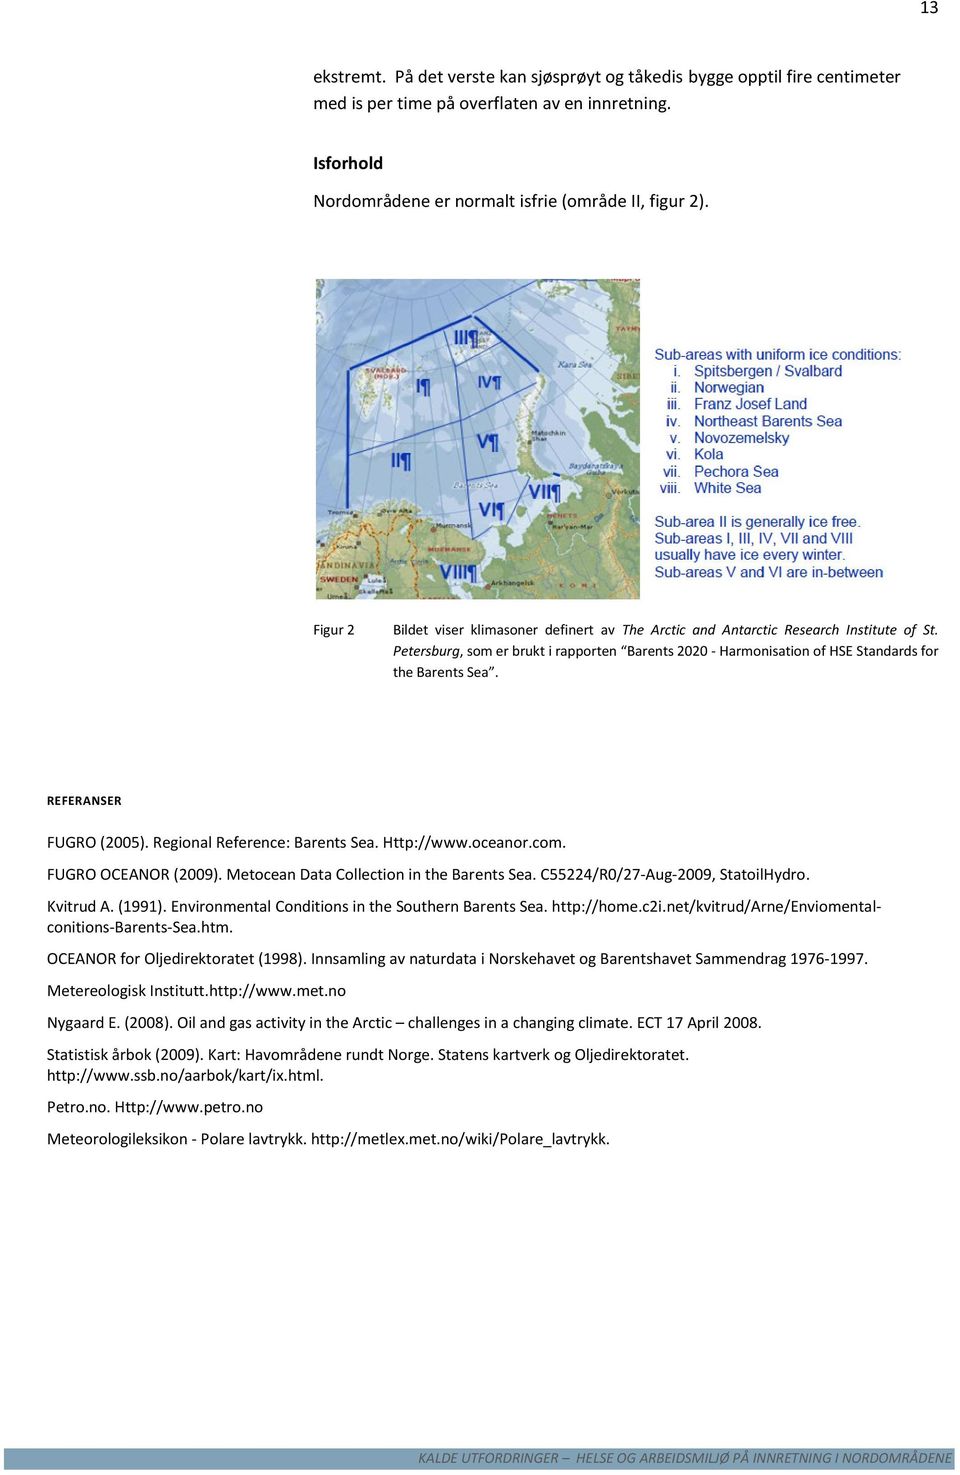 REFERANSER FUGRO (2005). Regional Reference: Barents Sea. Http://www.oceanor.com. FUGRO OCEANOR (2009). Metocean Data Collection in the Barents Sea. C55224/R0/27-Aug-2009, StatoilHydro. Kvitrud A.